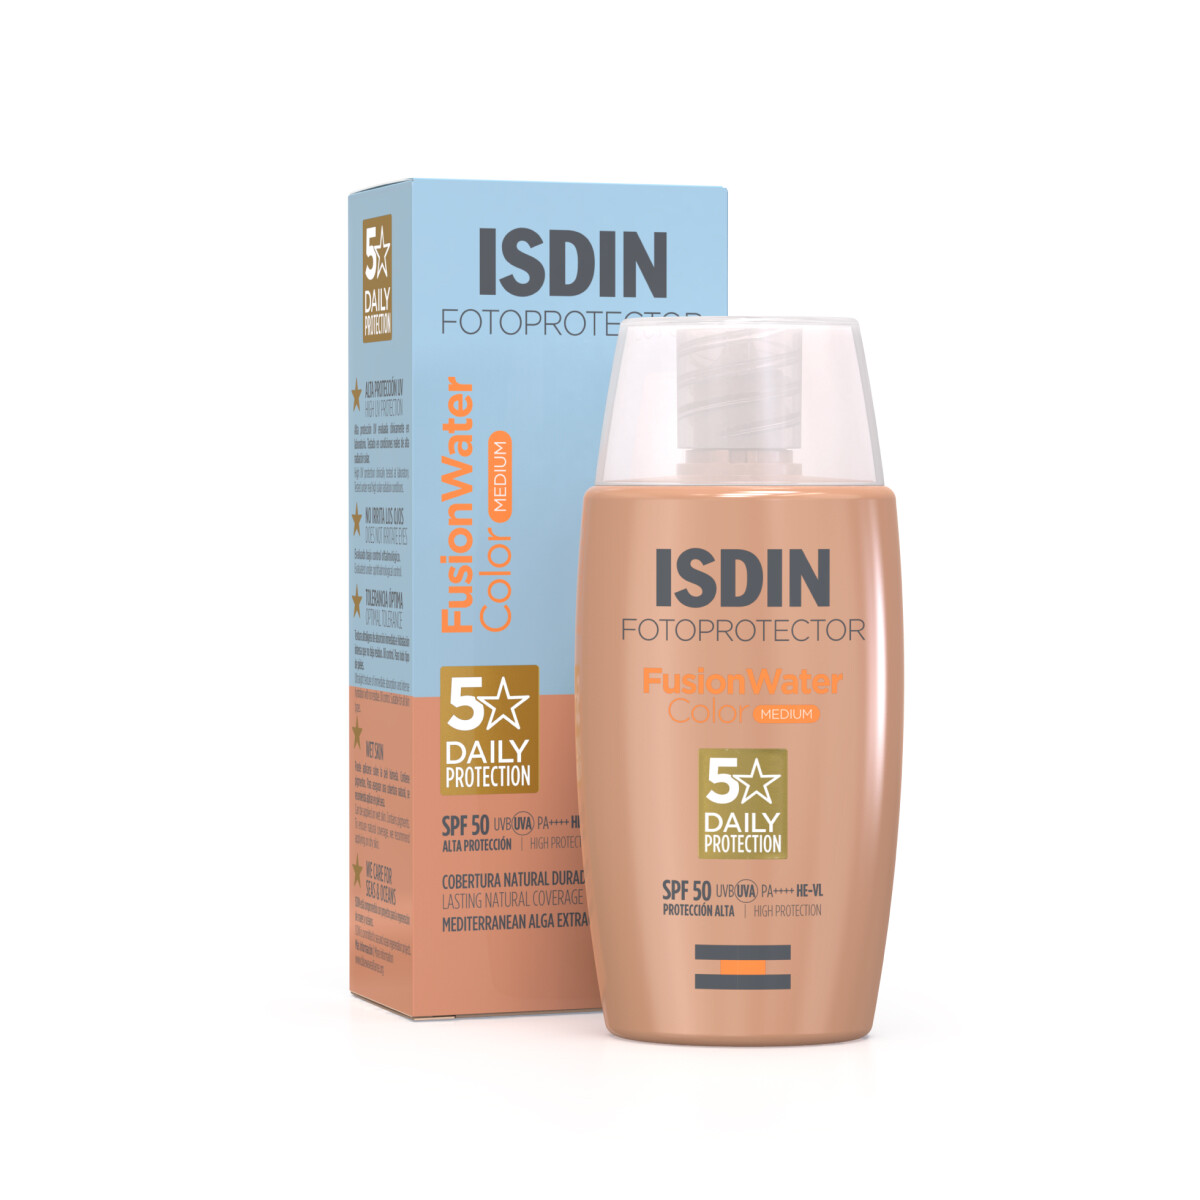 ISDIN Fotoprotector Fusion Water Color Medium SPF 50 - 50 ml 